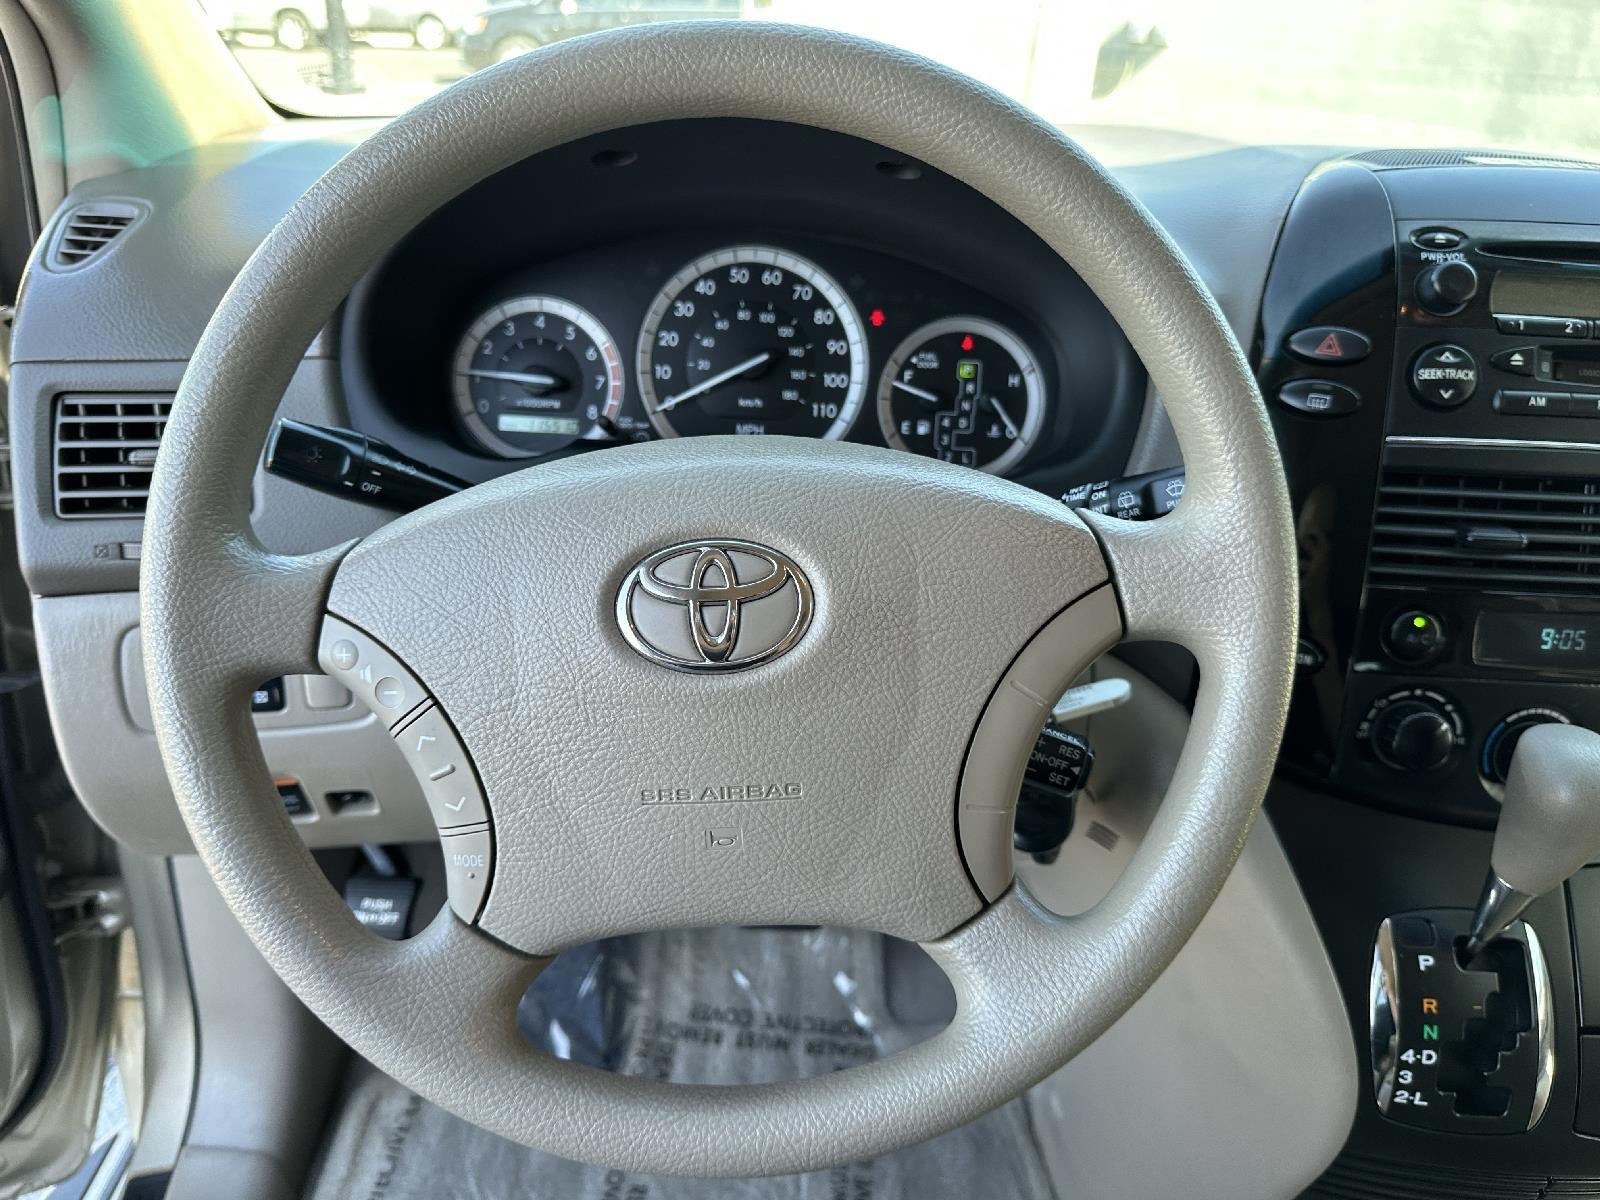 2004 Toyota Sienna CE